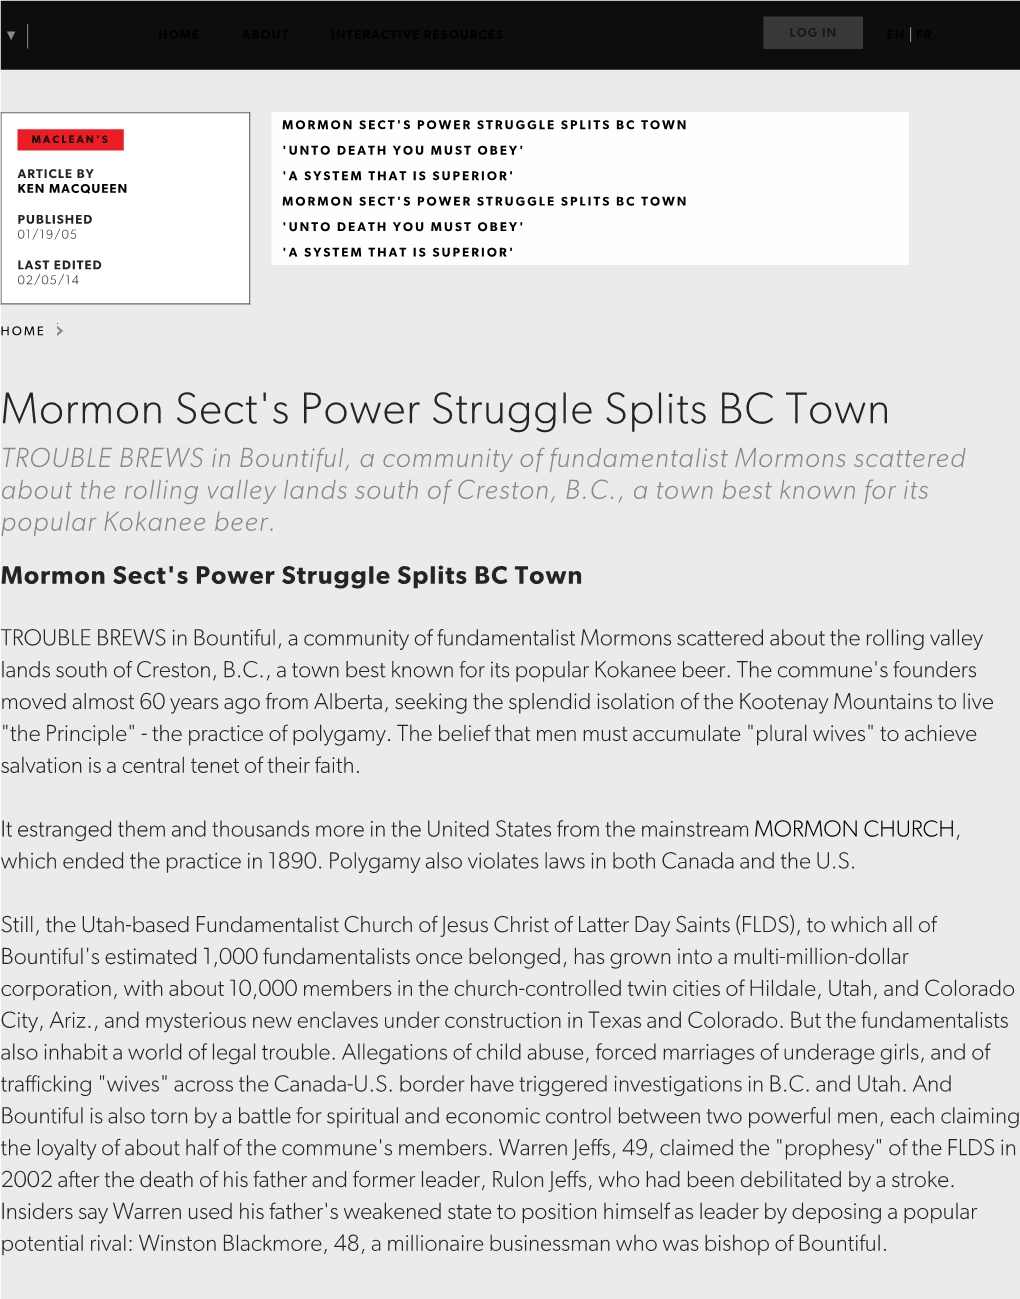 Mormon Sect's Power Struggle Splits BC Town